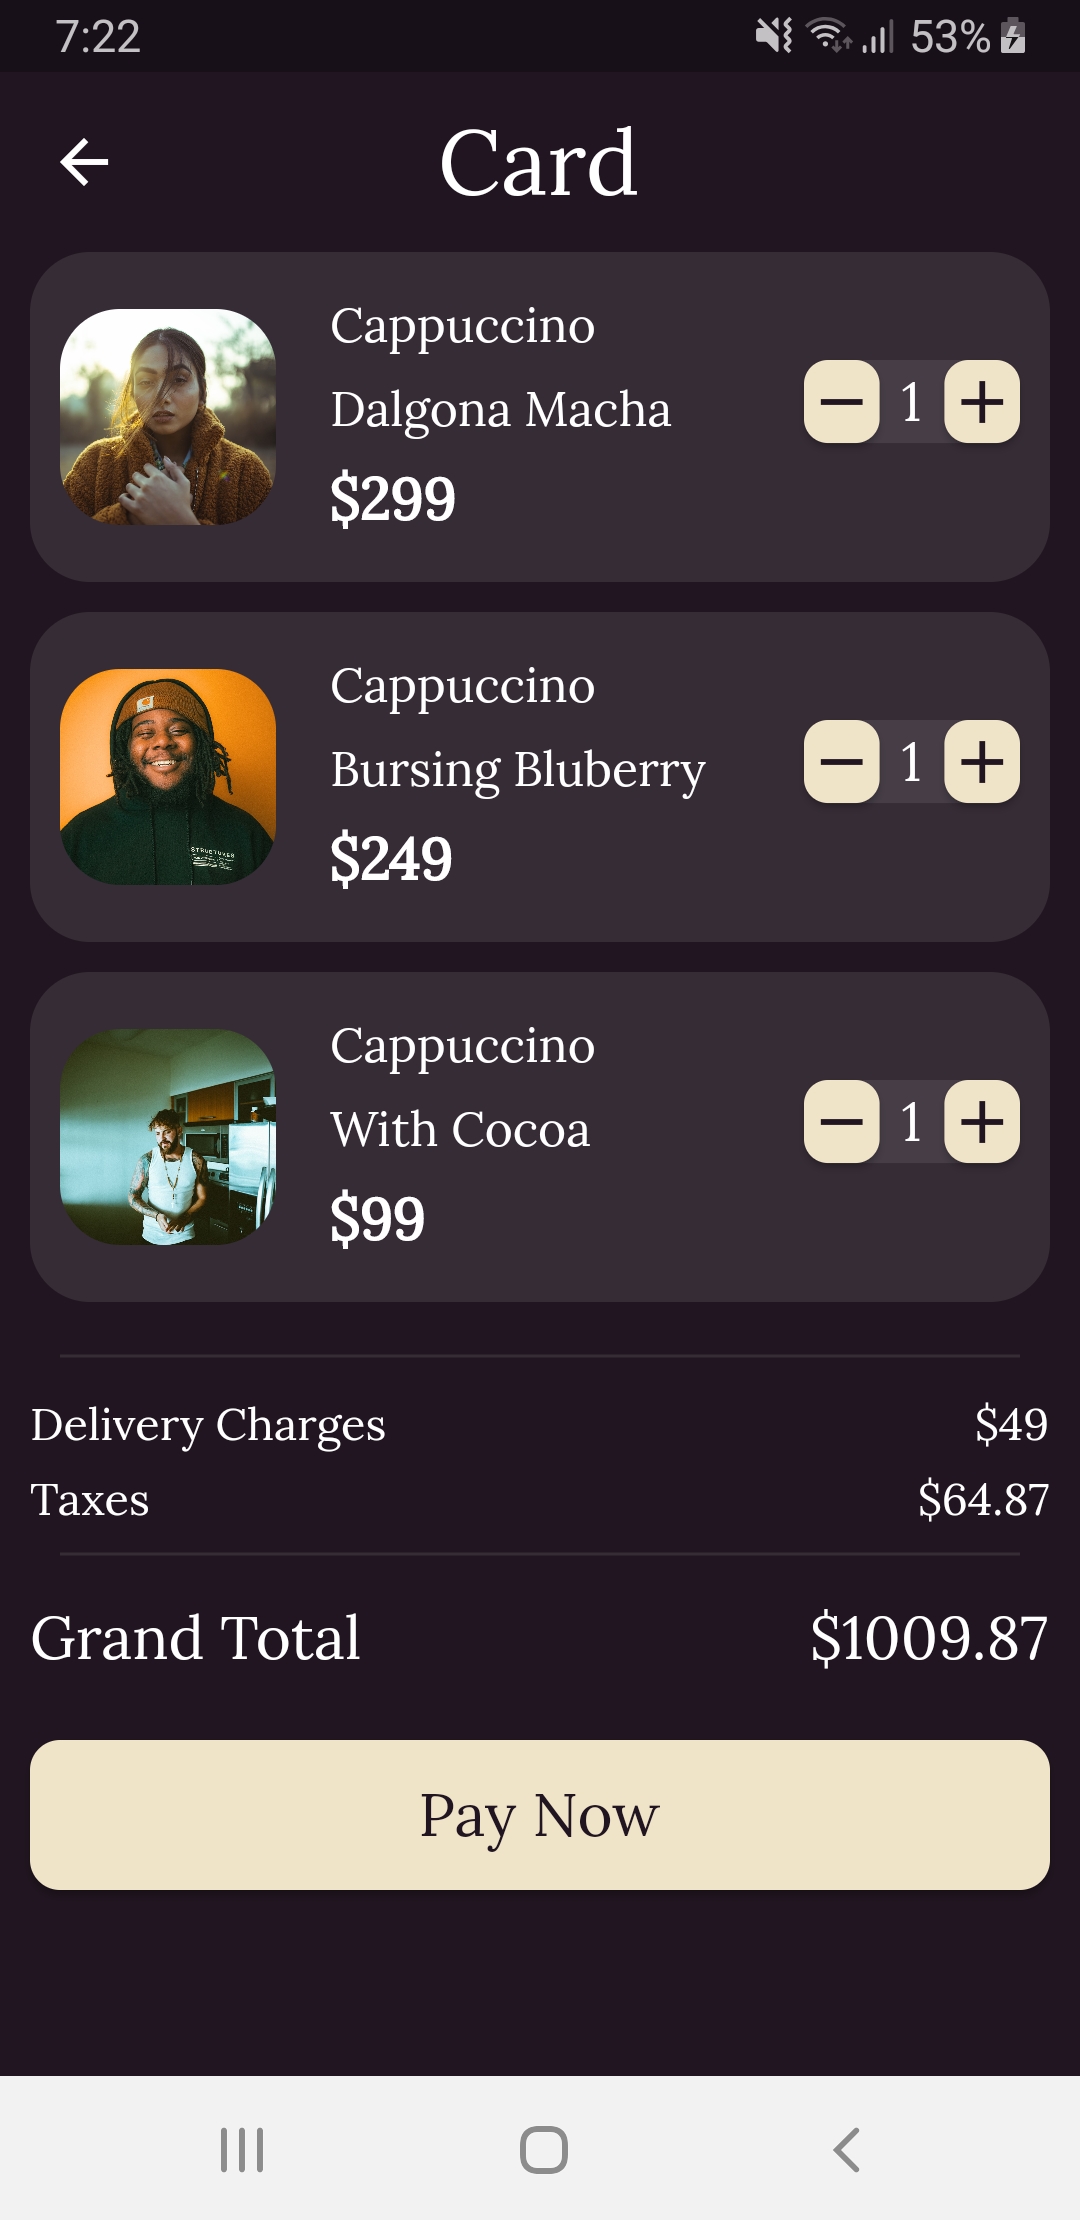 Coffee Shop App Original UI with Flutter